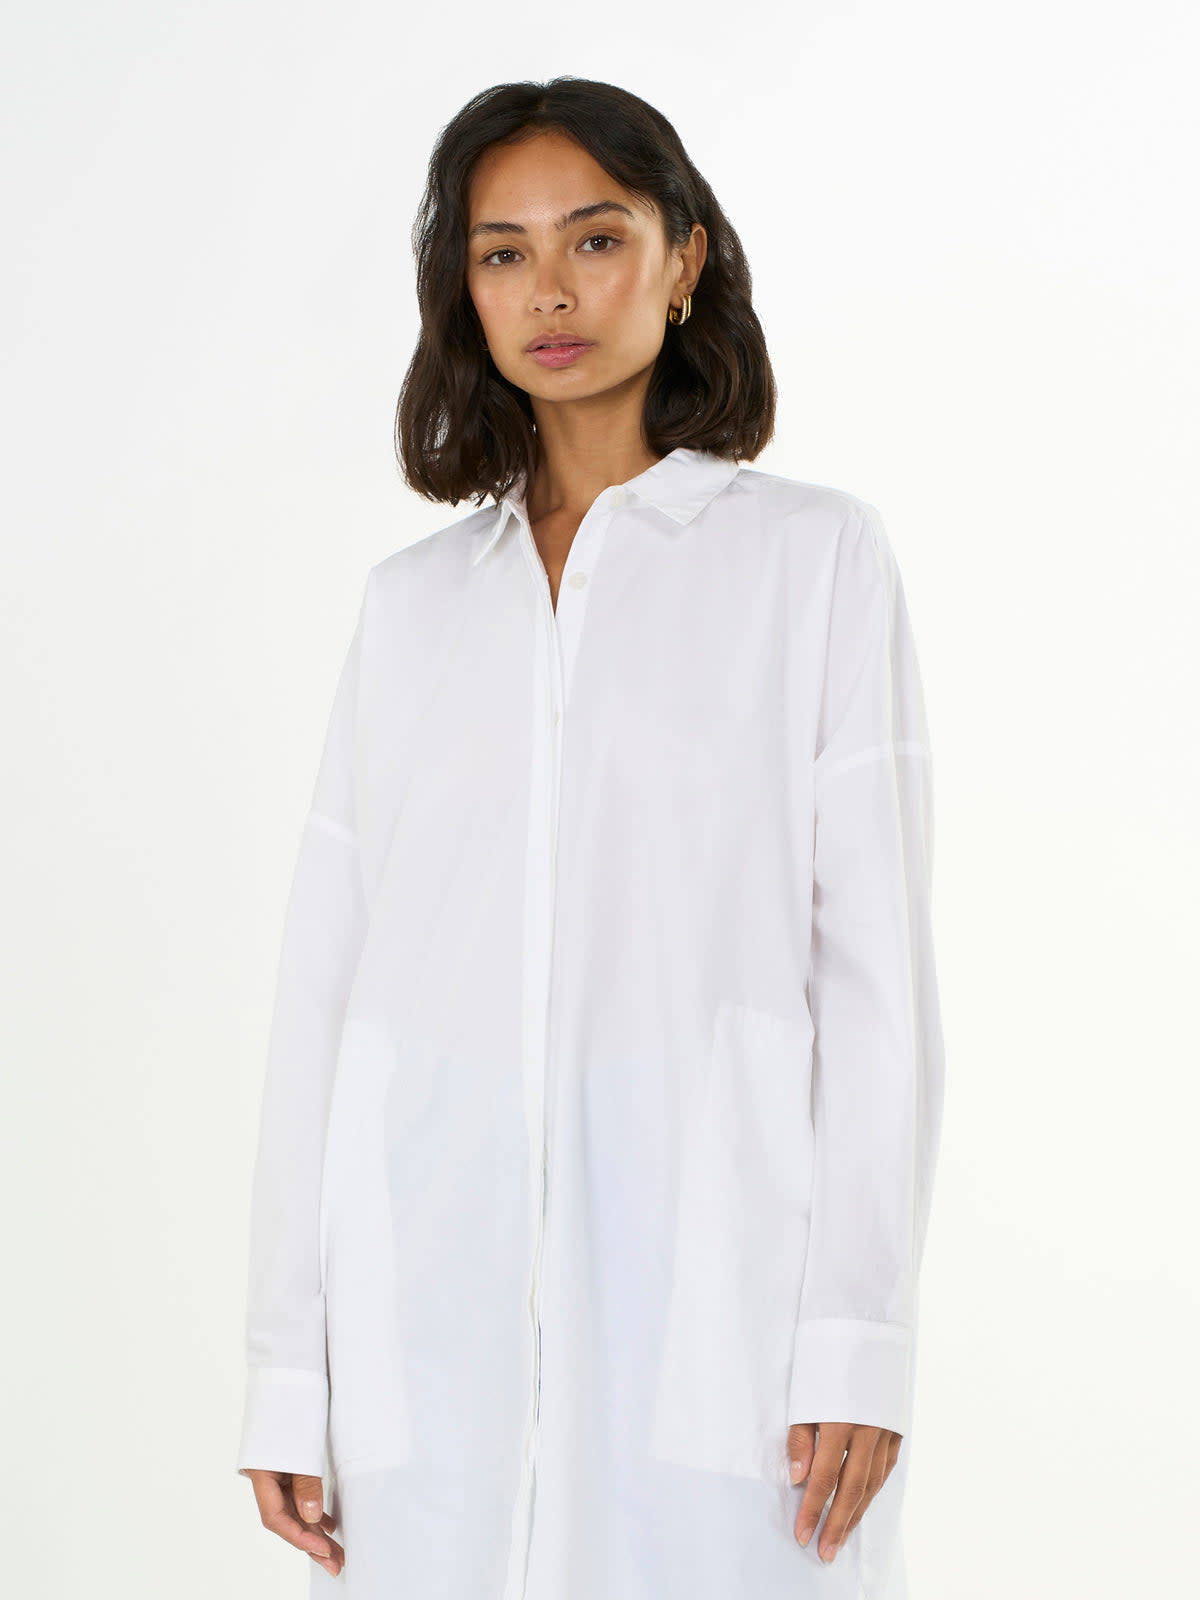 KnowledgeCotton Apparel KnowledgeCotton, Poplin Shirt Dress, bright white, S